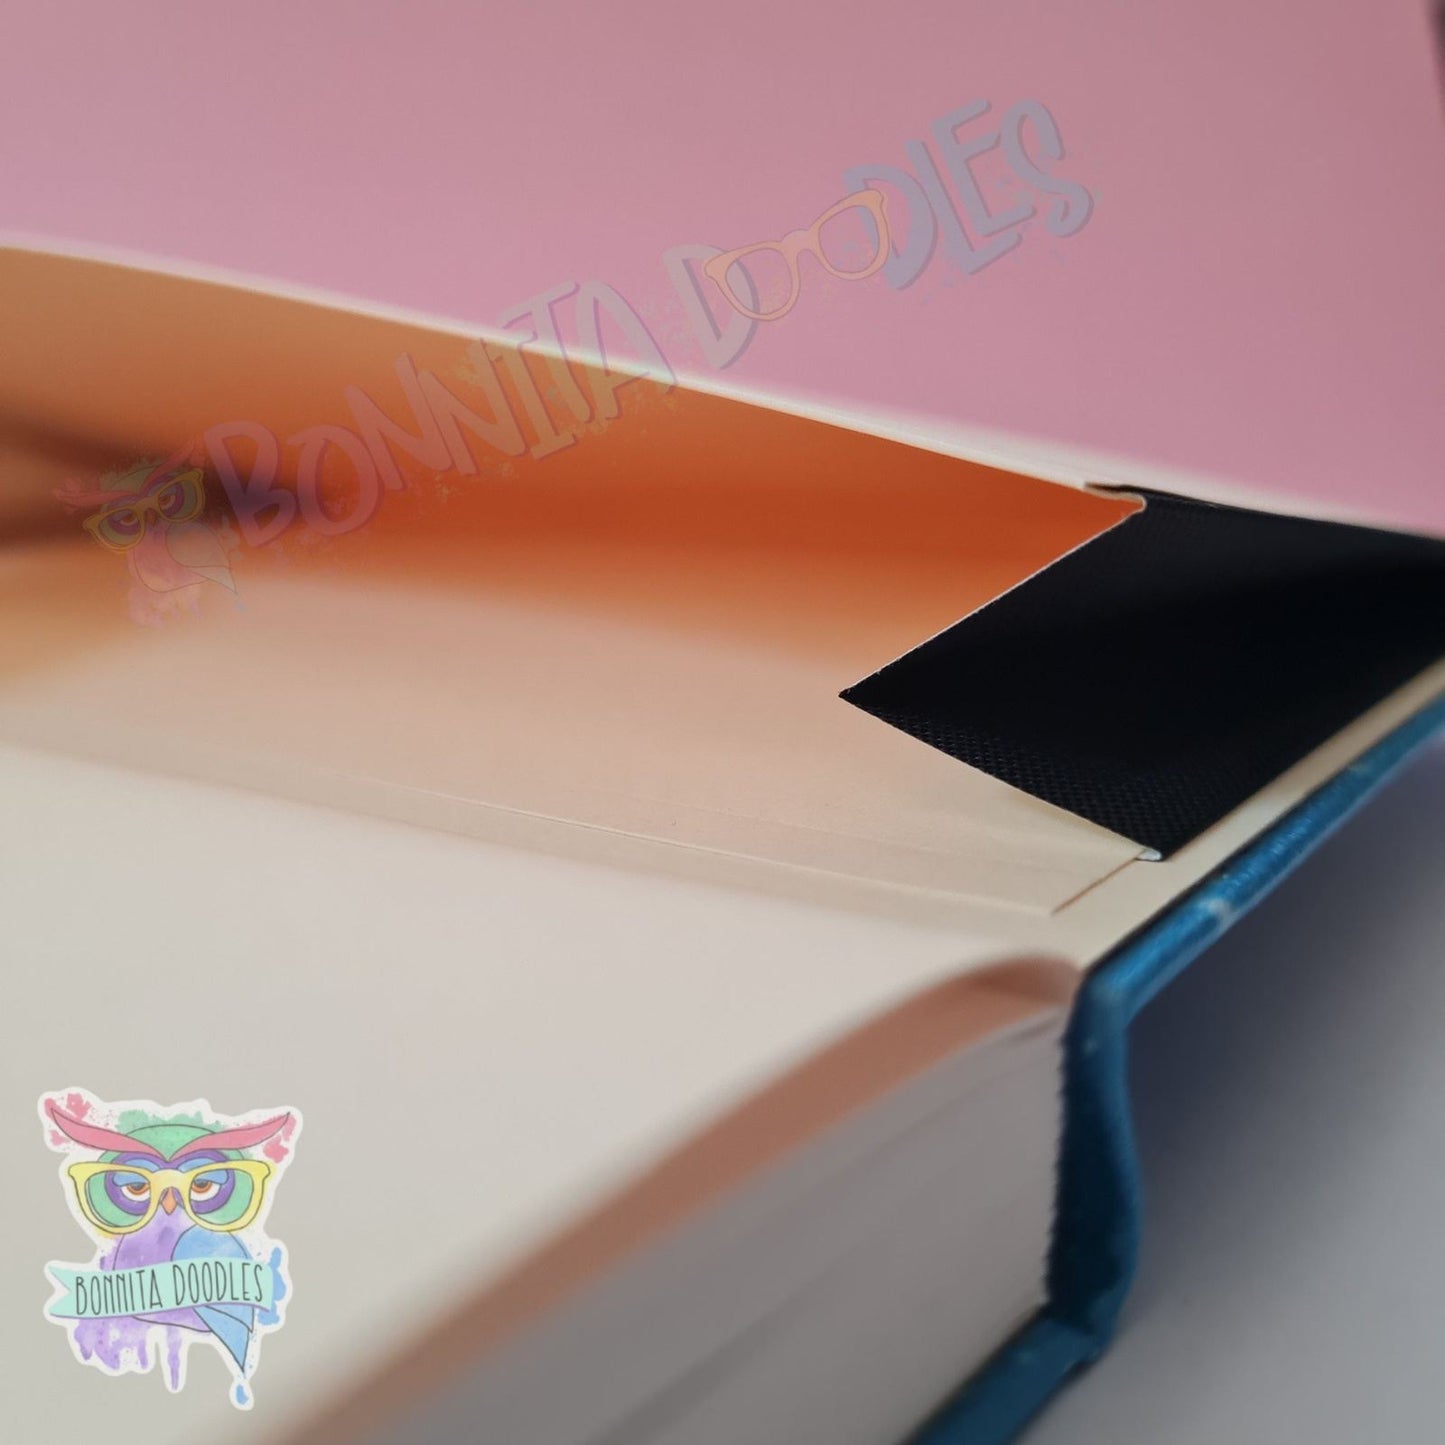 Pancake bunny hard backed journal - perfect gift